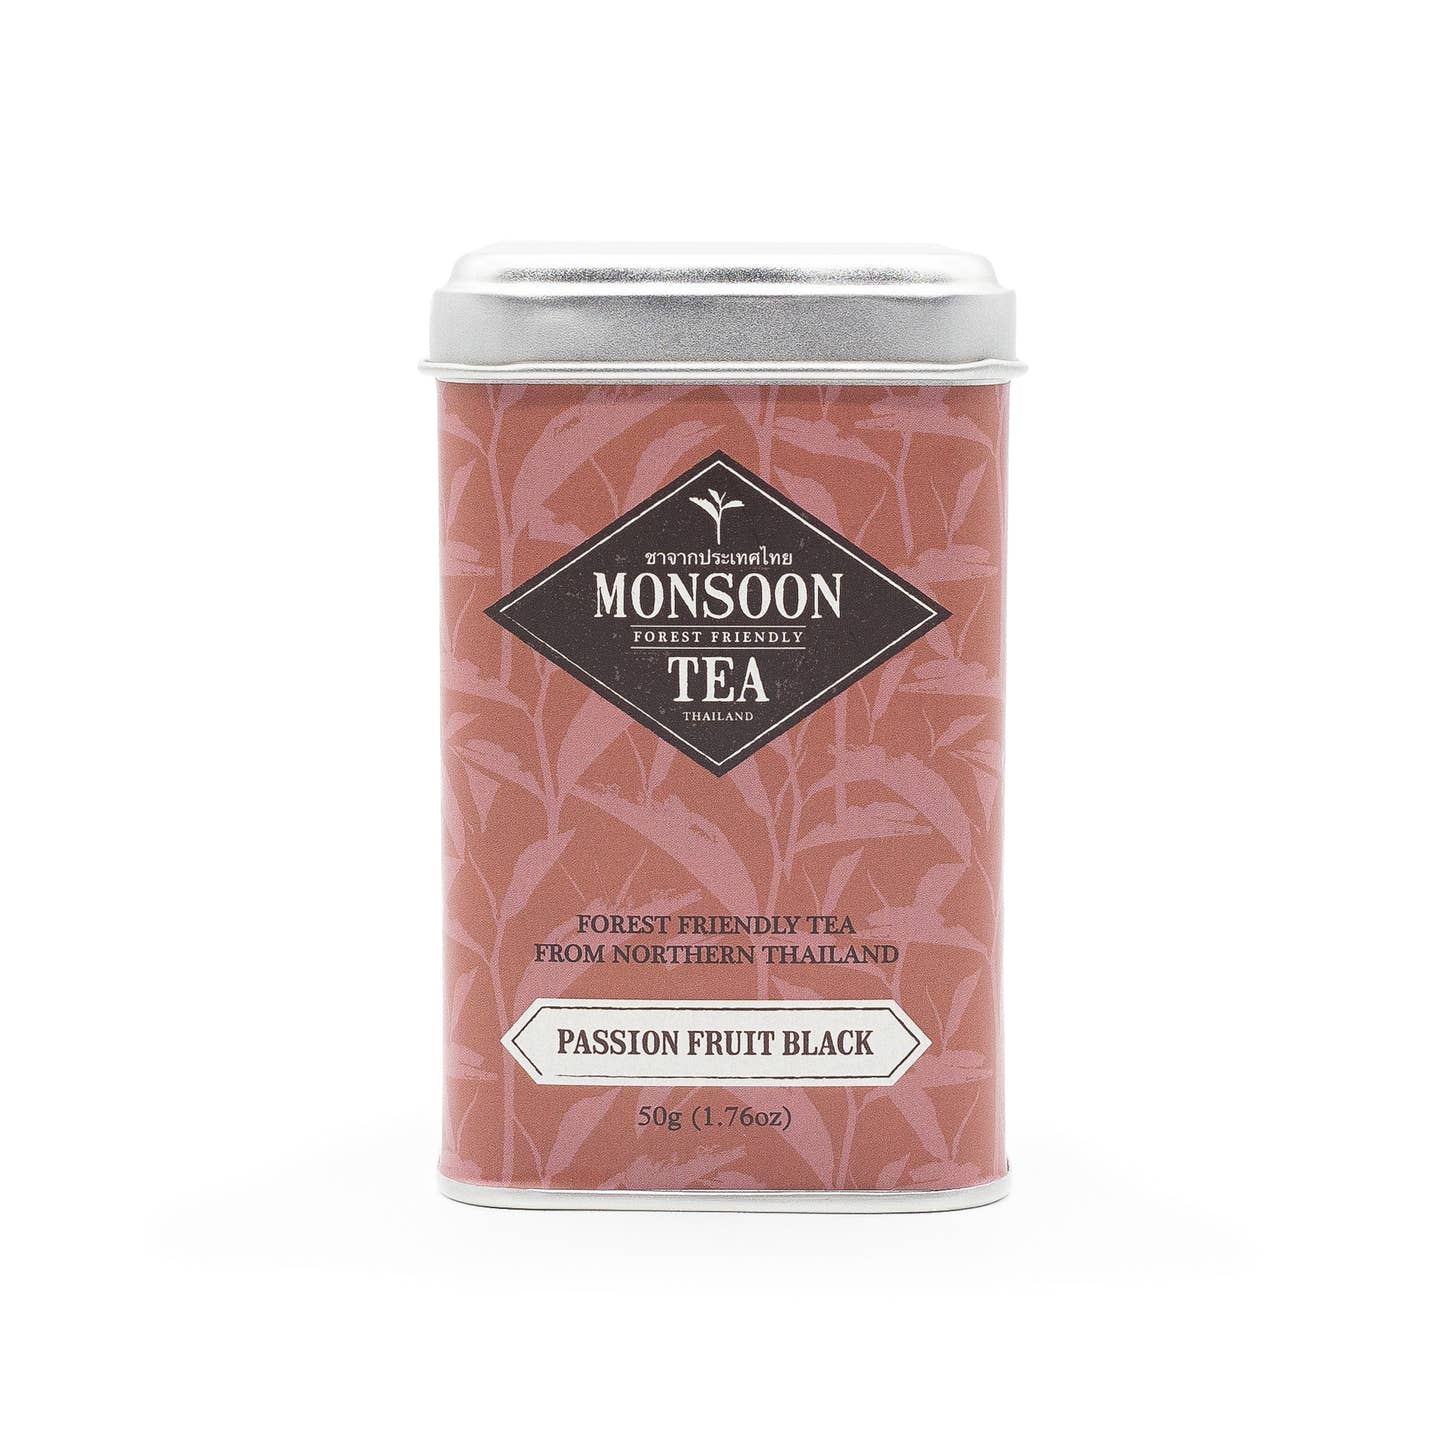 Passion Fruit Black by Monsoon Tea loose leaf tea tin printed with red tea leaves